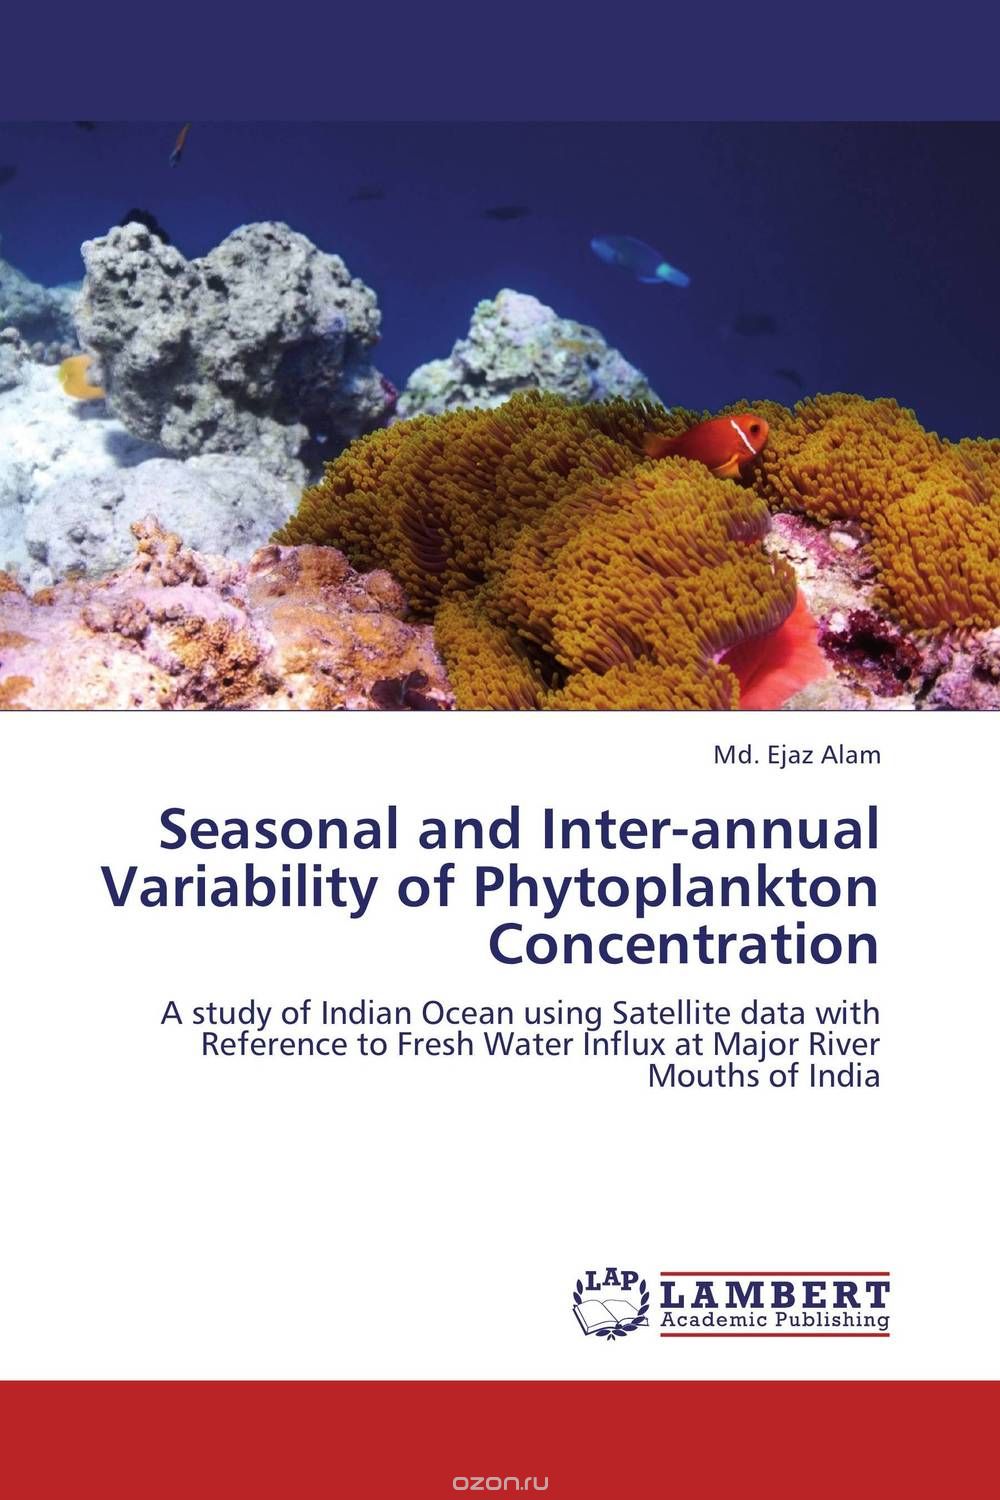 Скачать книгу "Seasonal and Inter-annual Variability of Phytoplankton Concentration"